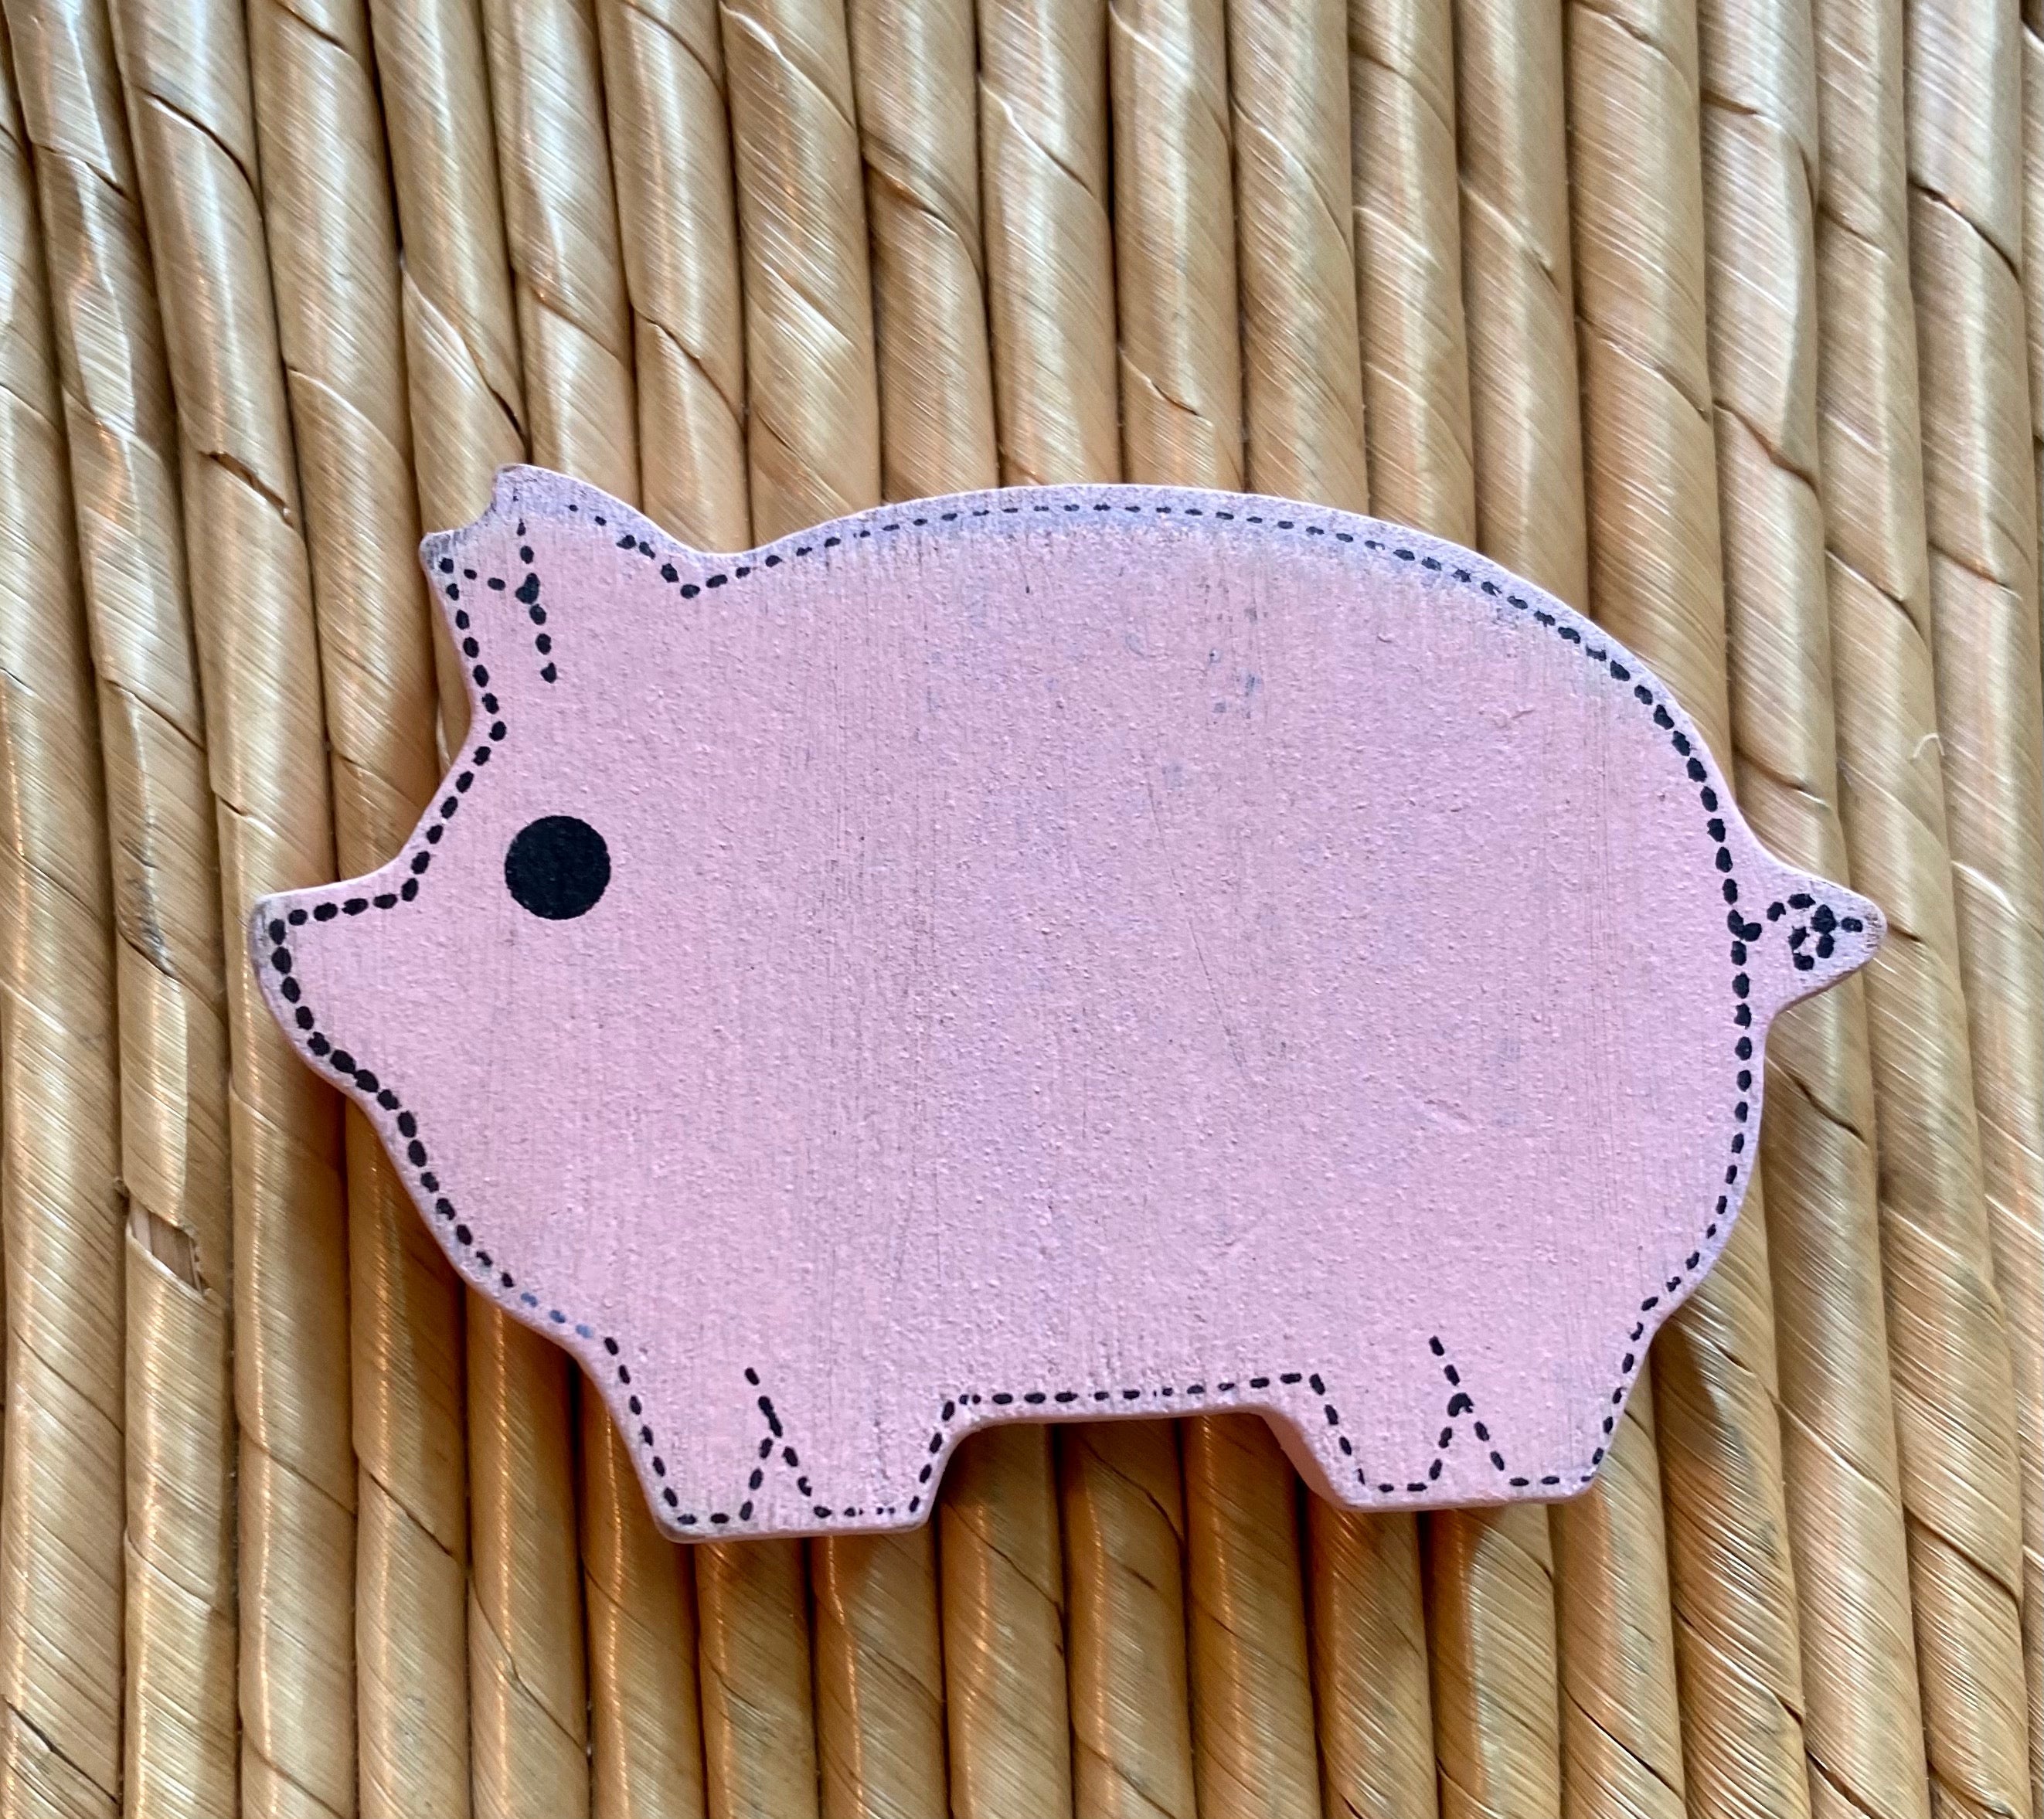 pig adams tile shape cut out for letterboard